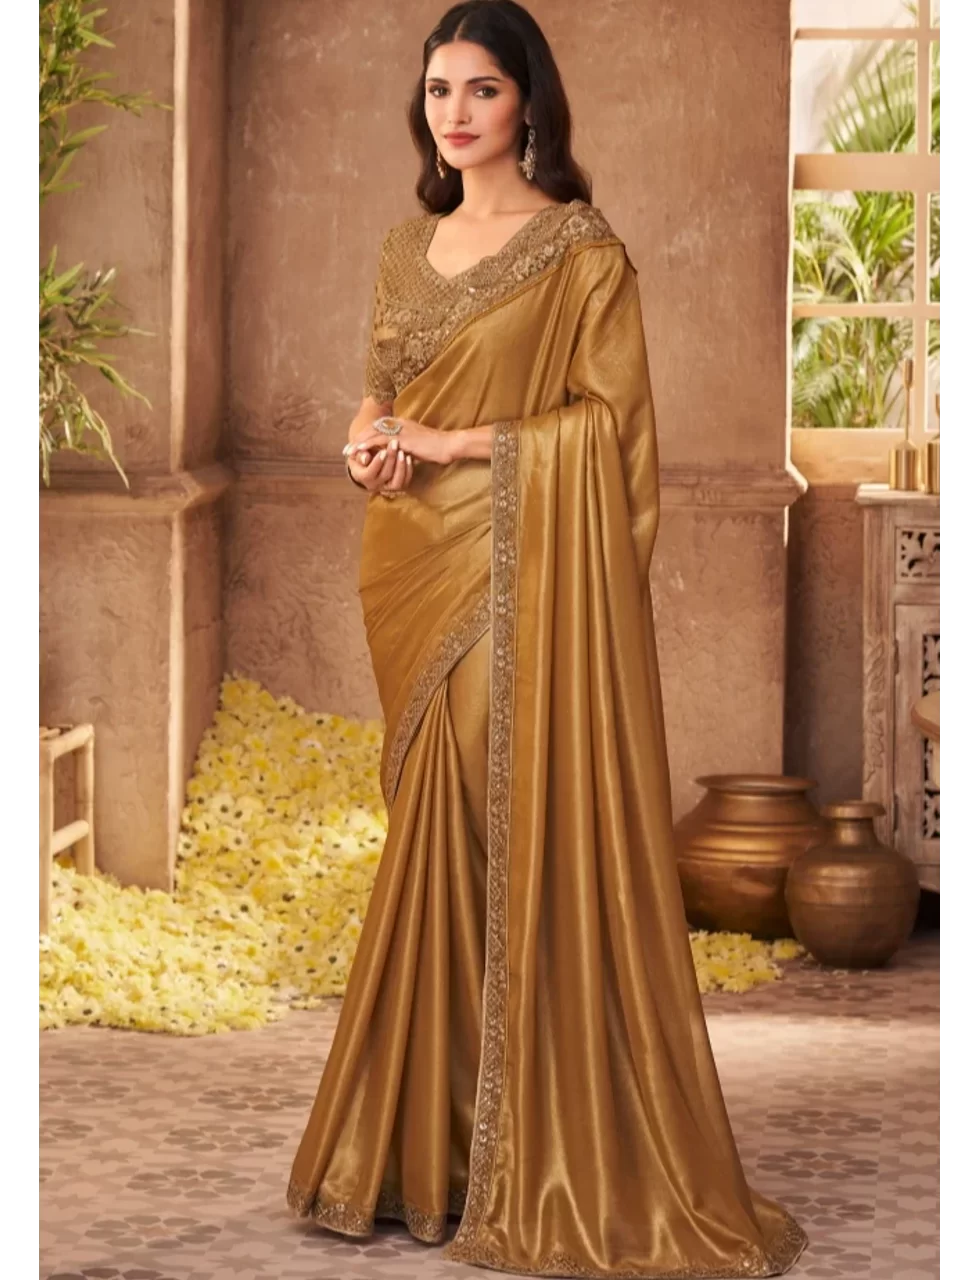 New Design Sraee Party Wear Chiffon Golden Colour Saree